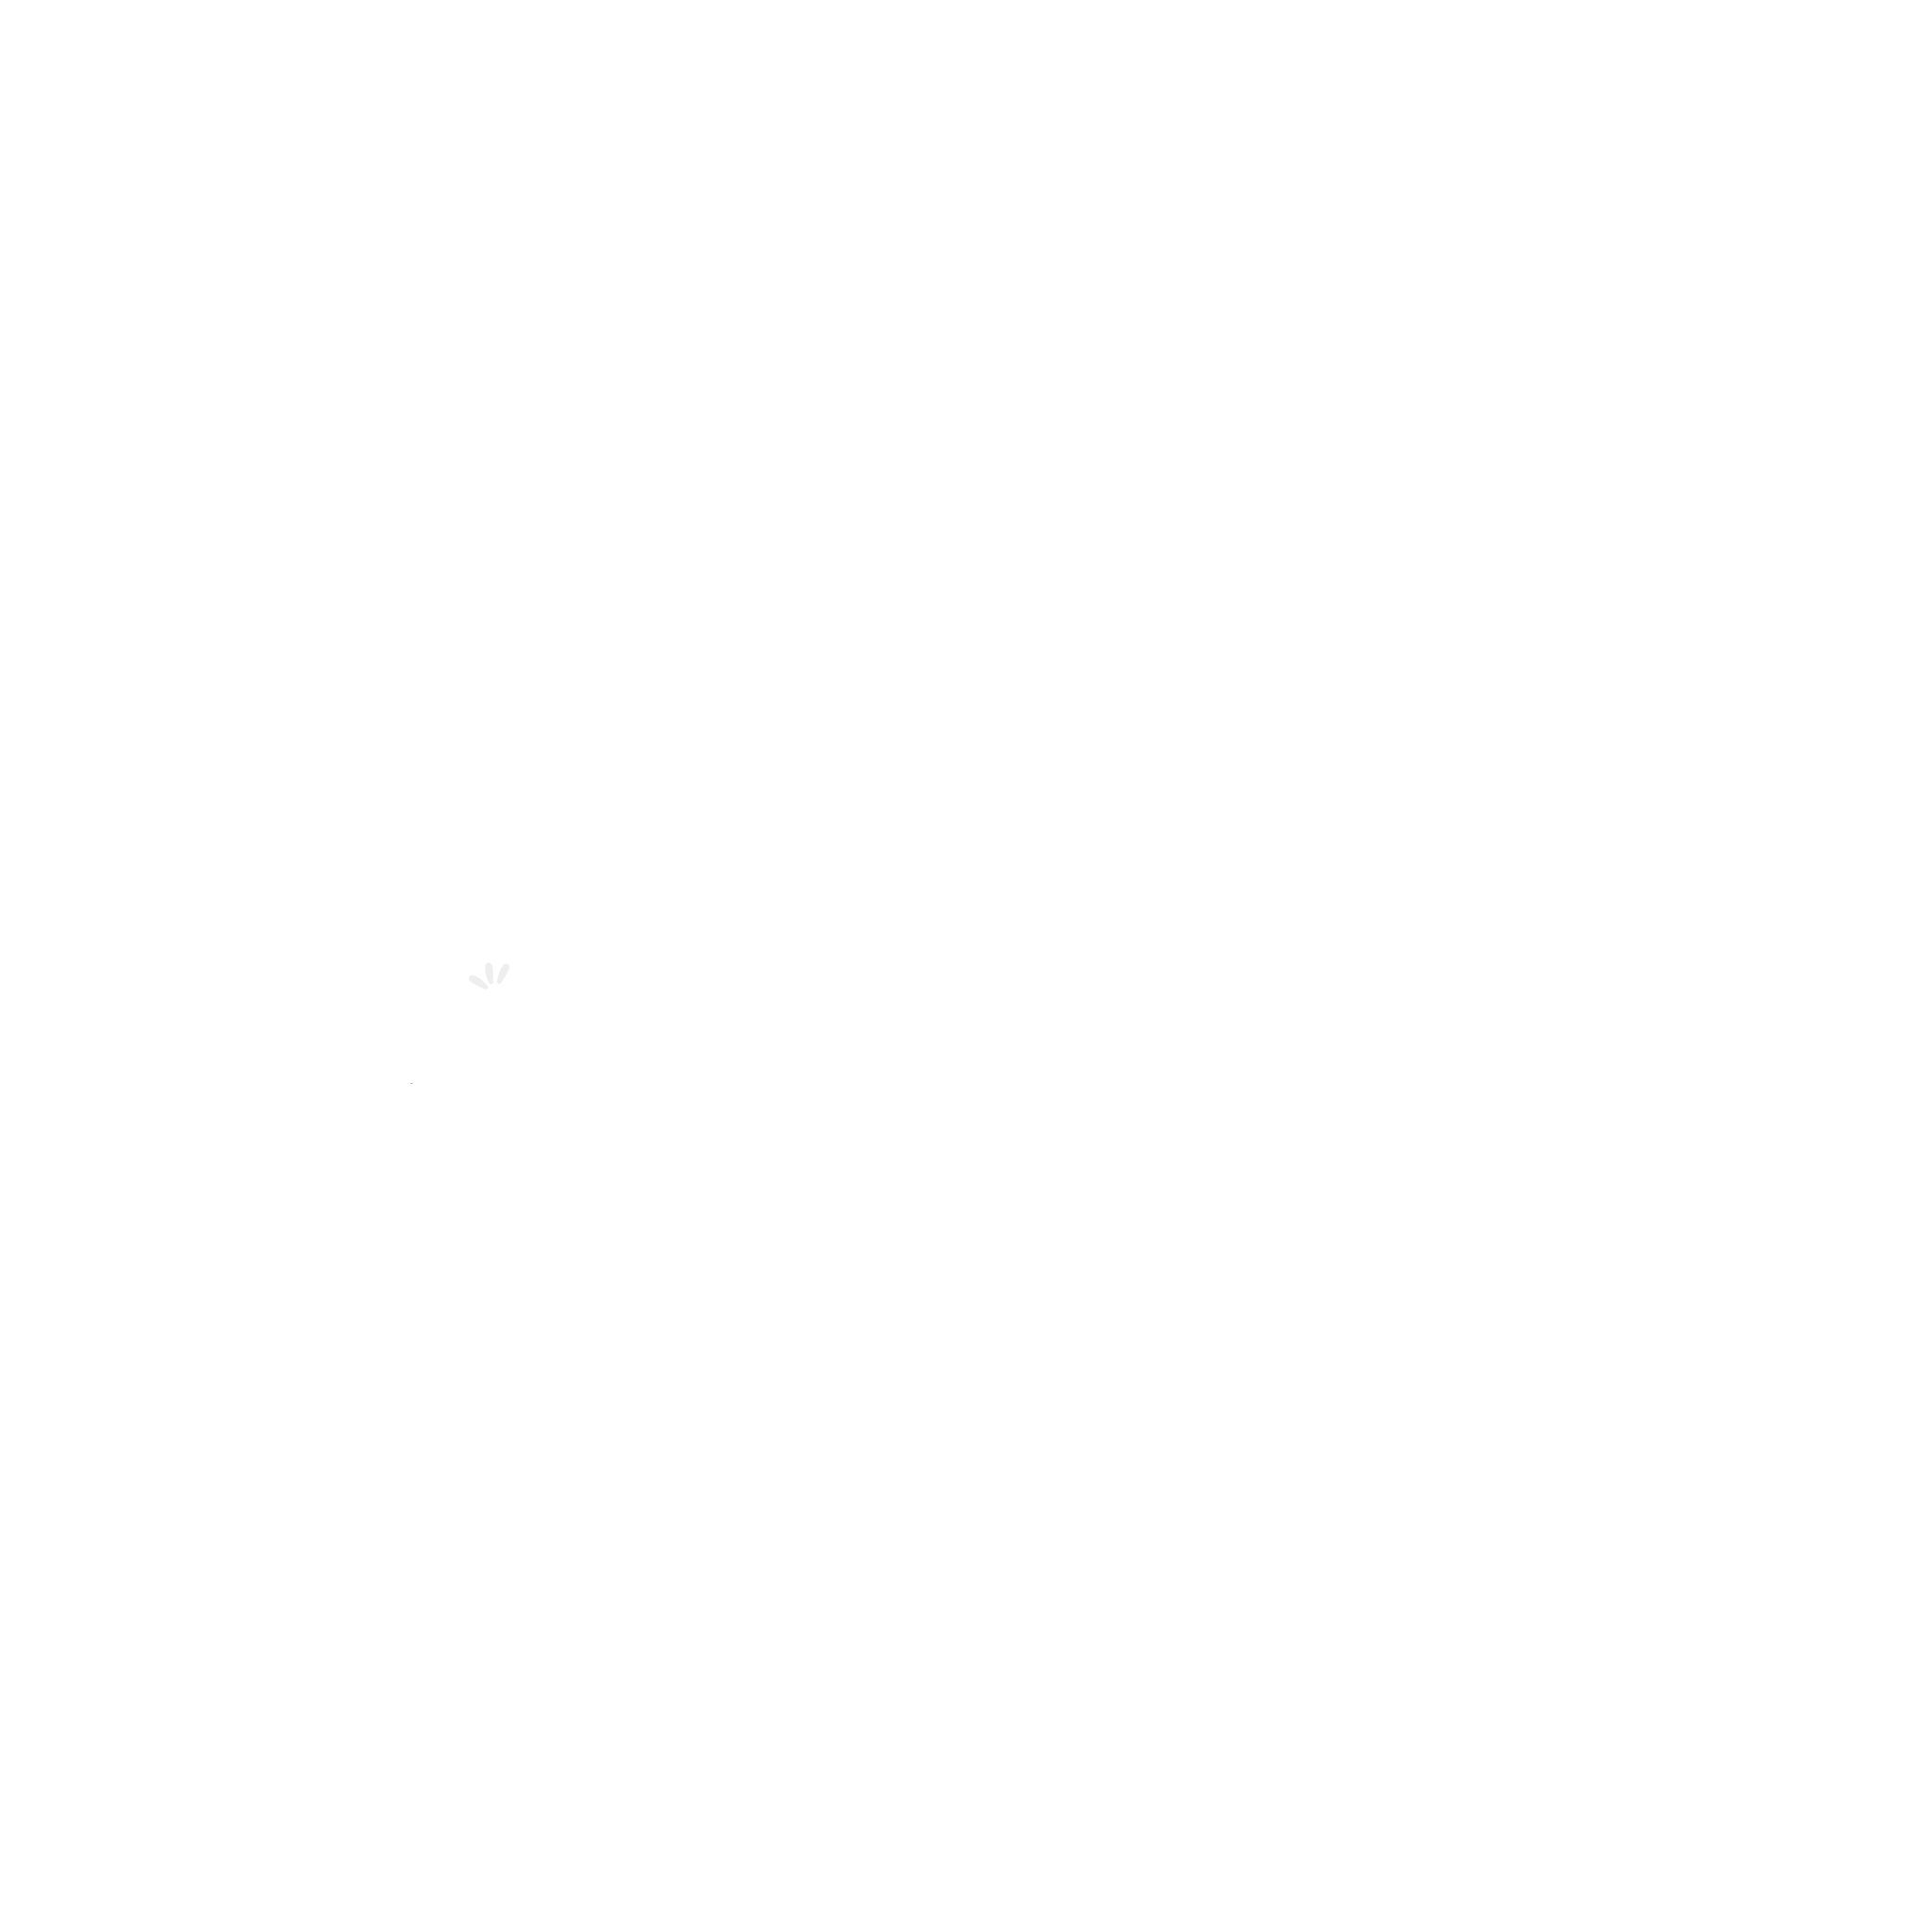 Sisu Design Studio_Grayscale Client Logos_White_Lumi and Coco.png